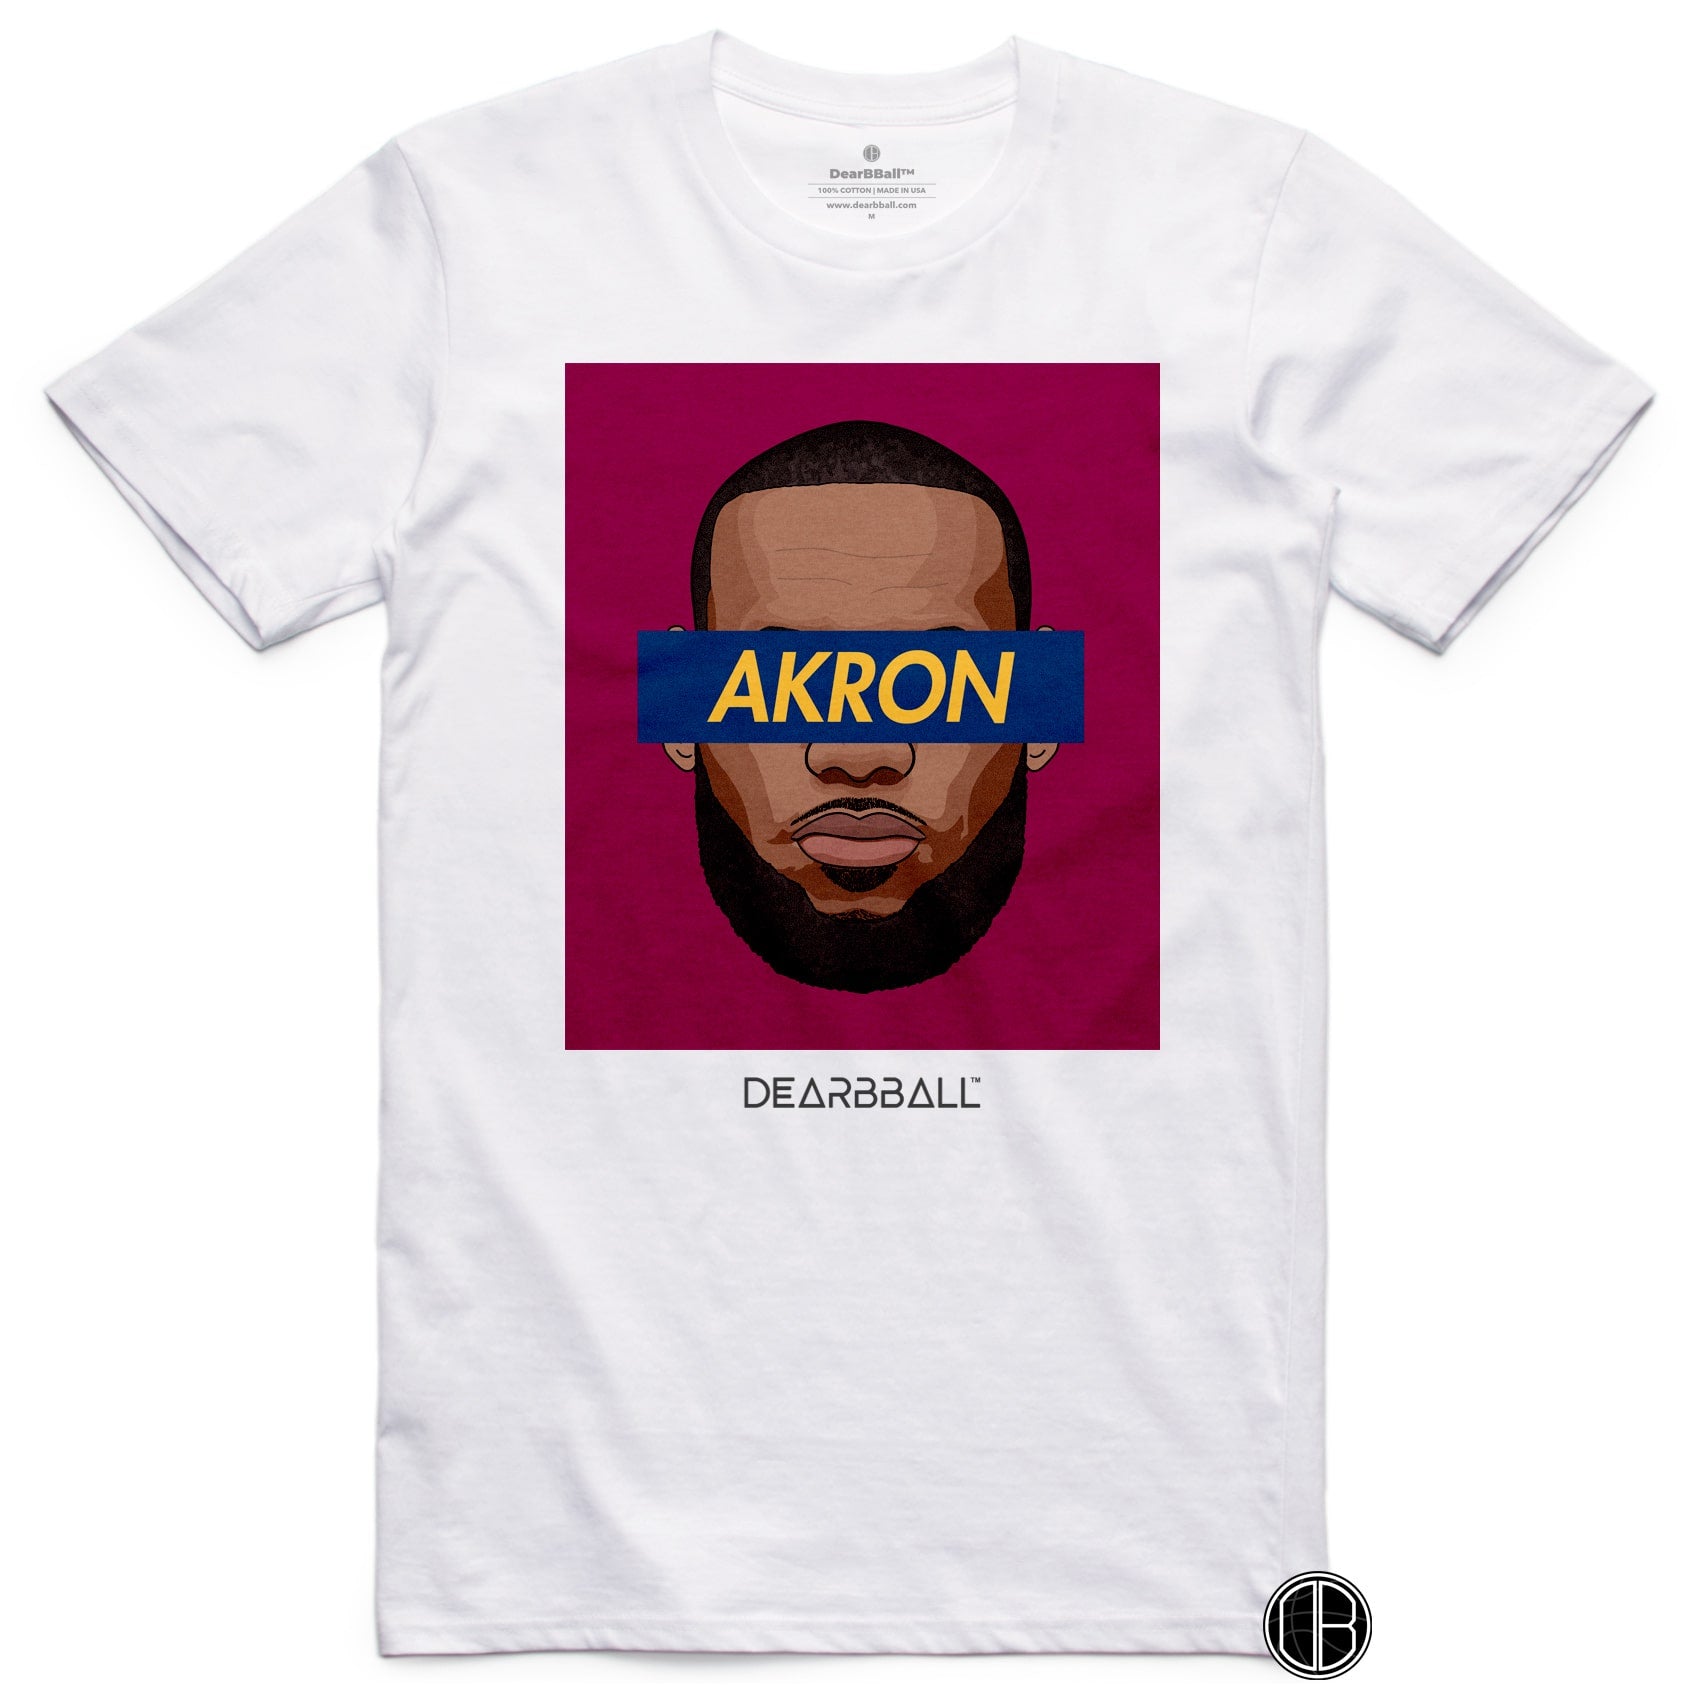 DearBBall T-Shirt - King AKRON Edition